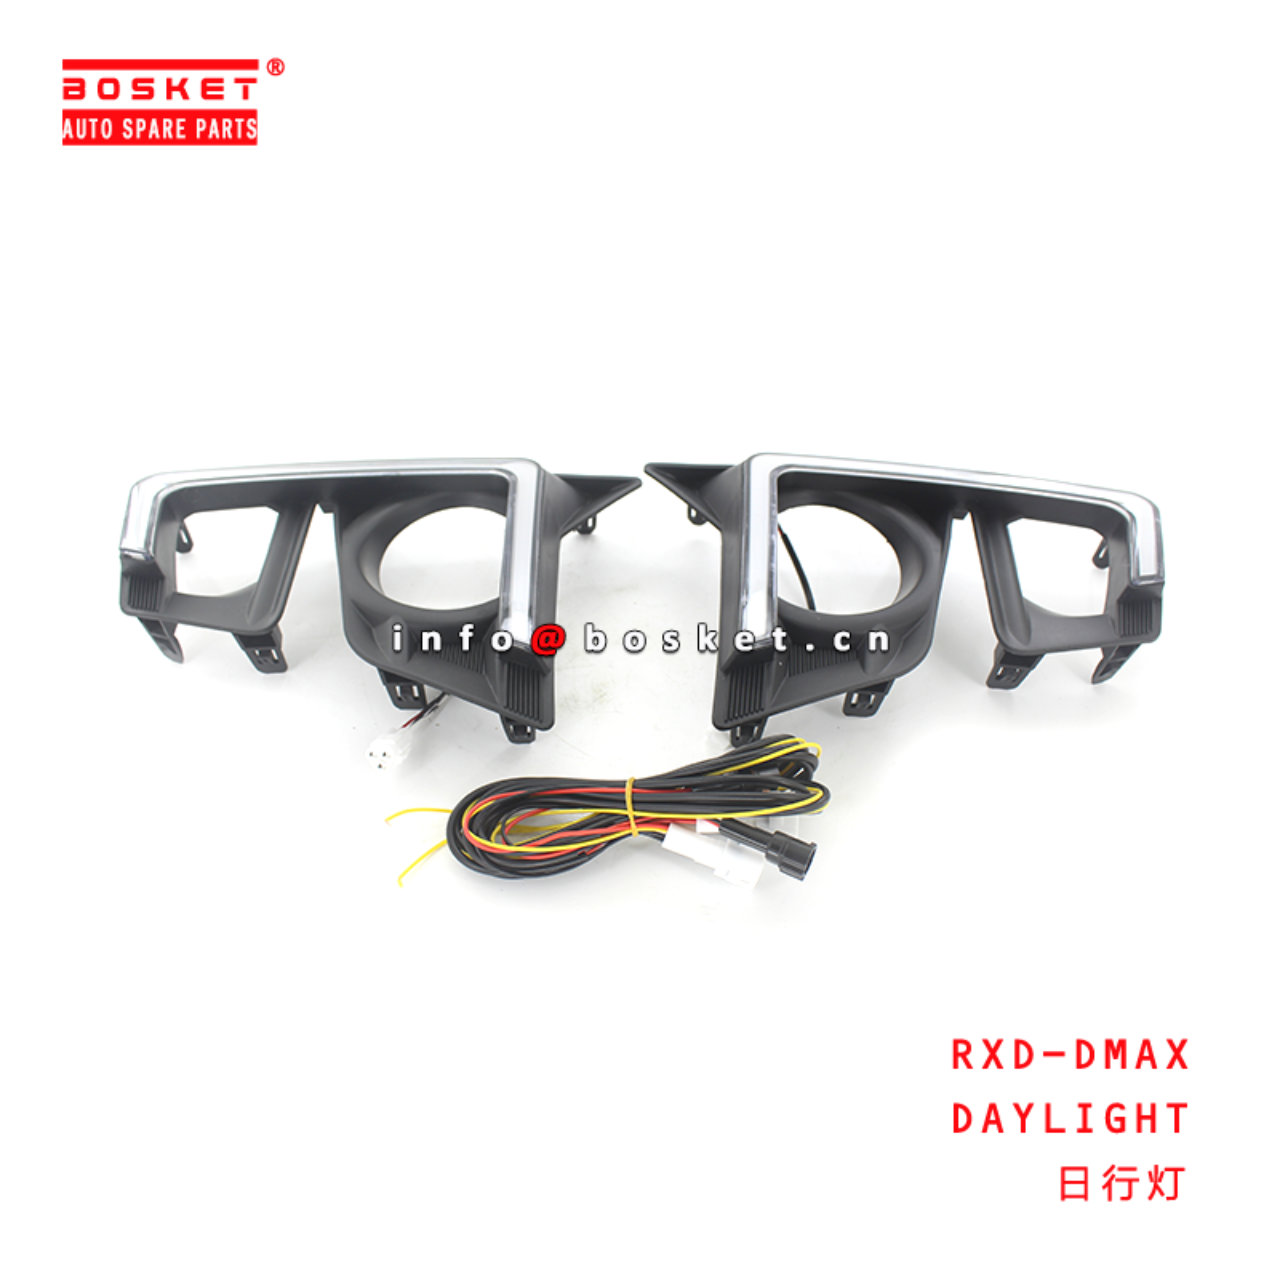 RXD-DMAX Daylight Suitable for ISUZU DMAX RXD-DMAX